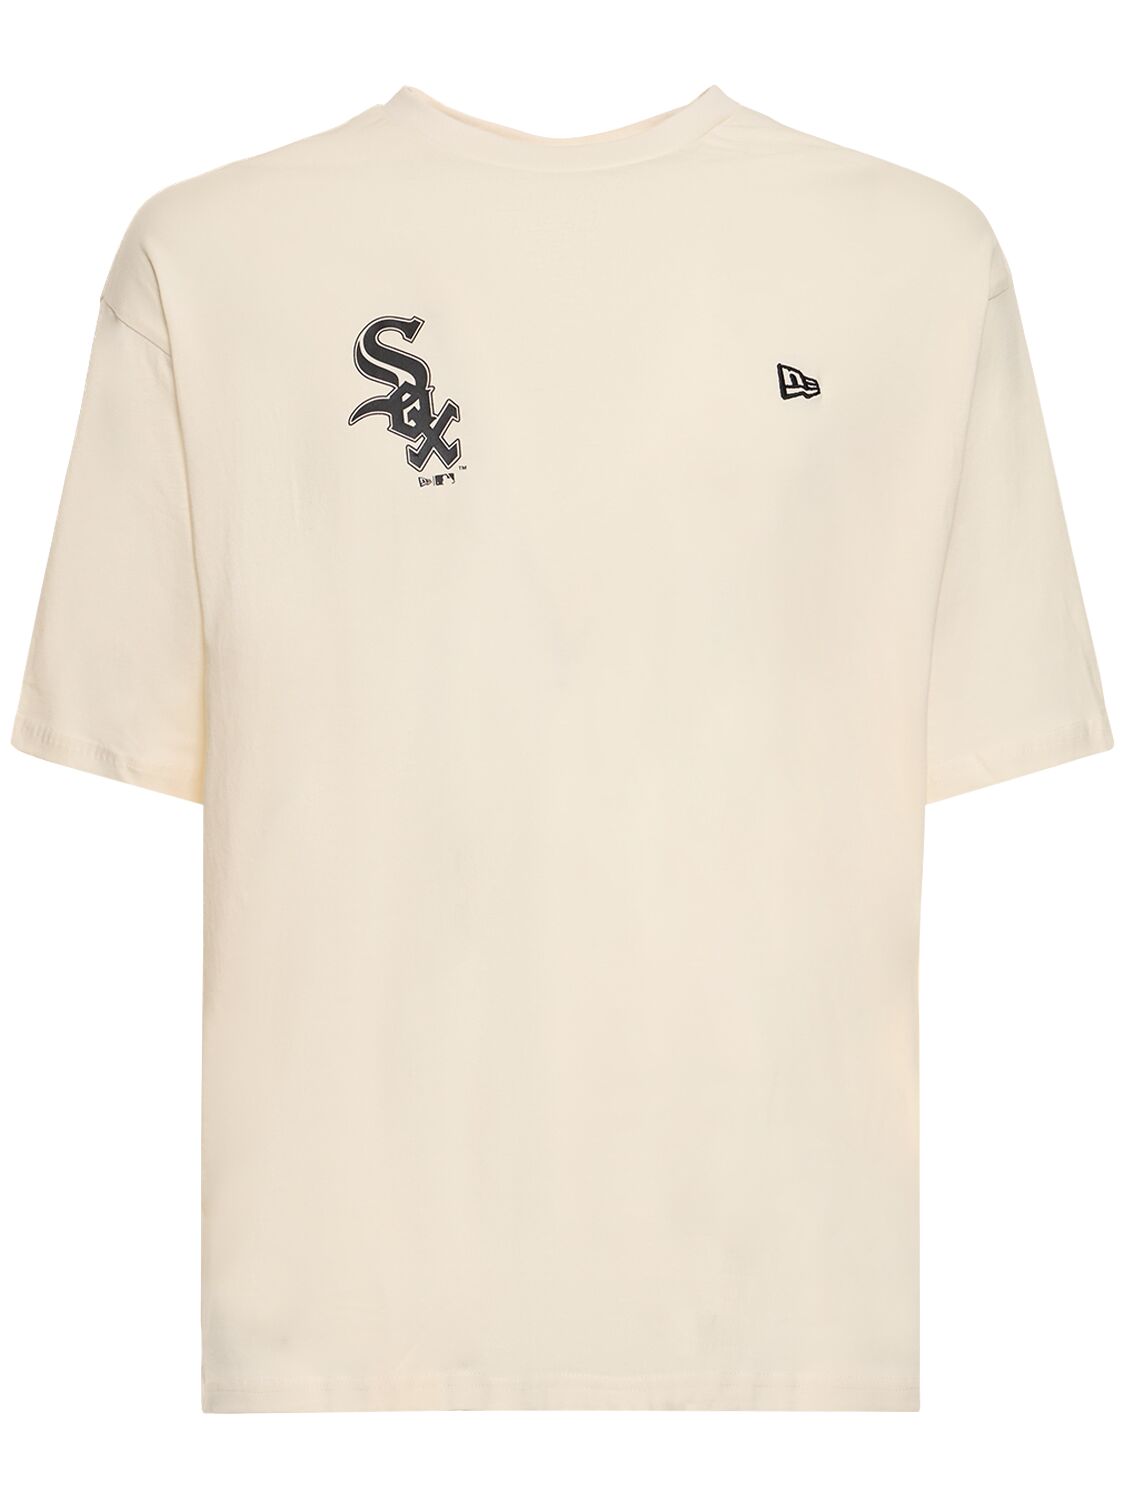 New Era Chicago White Sox印花t恤 In White,black